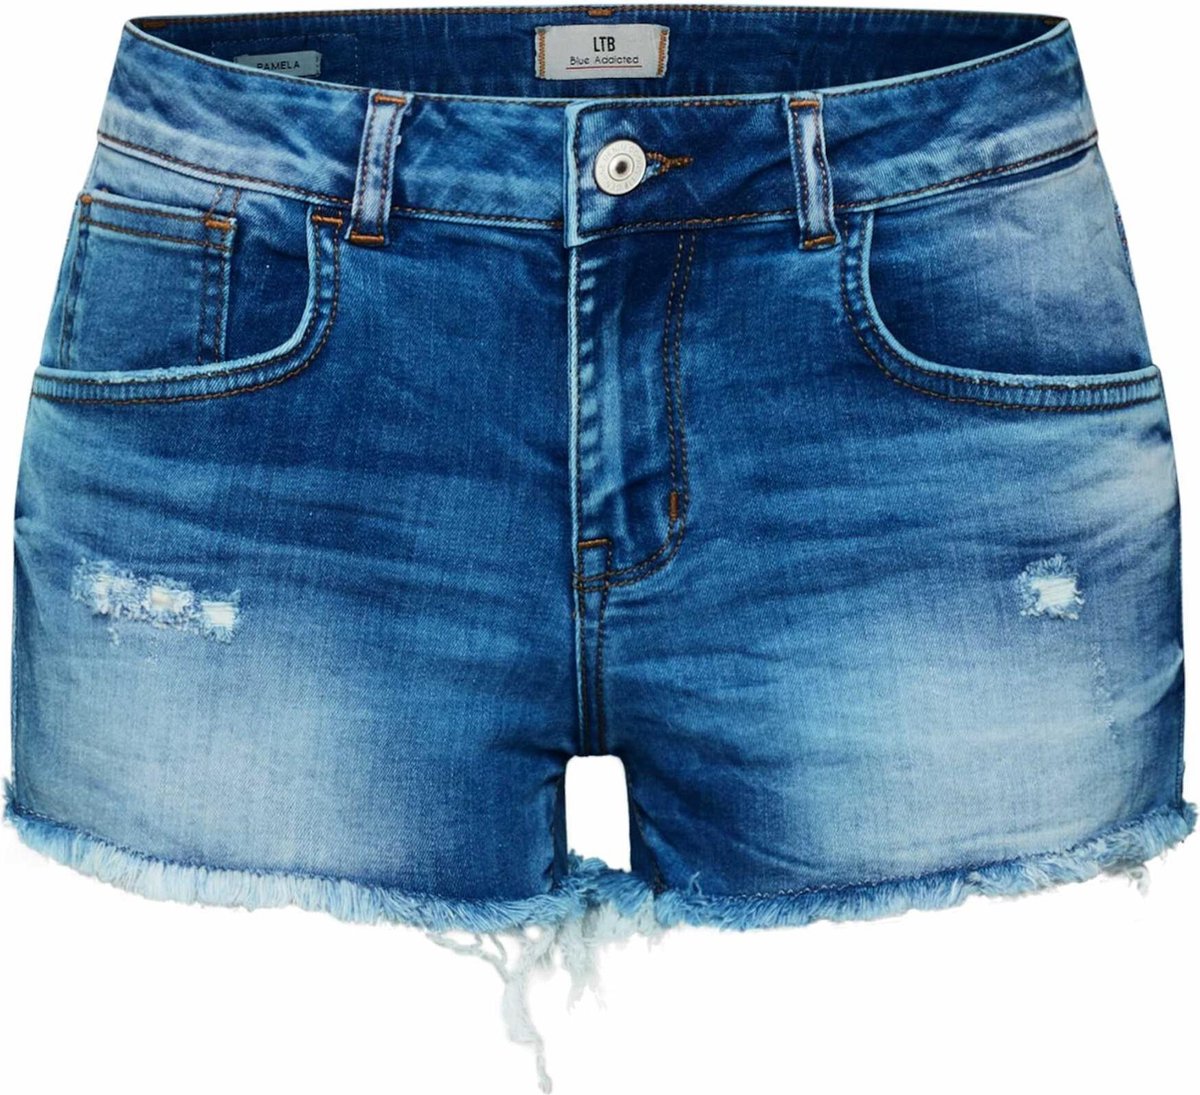 Ltb jeans pamela Blauw Denim-xxl (43-44) | bol.com